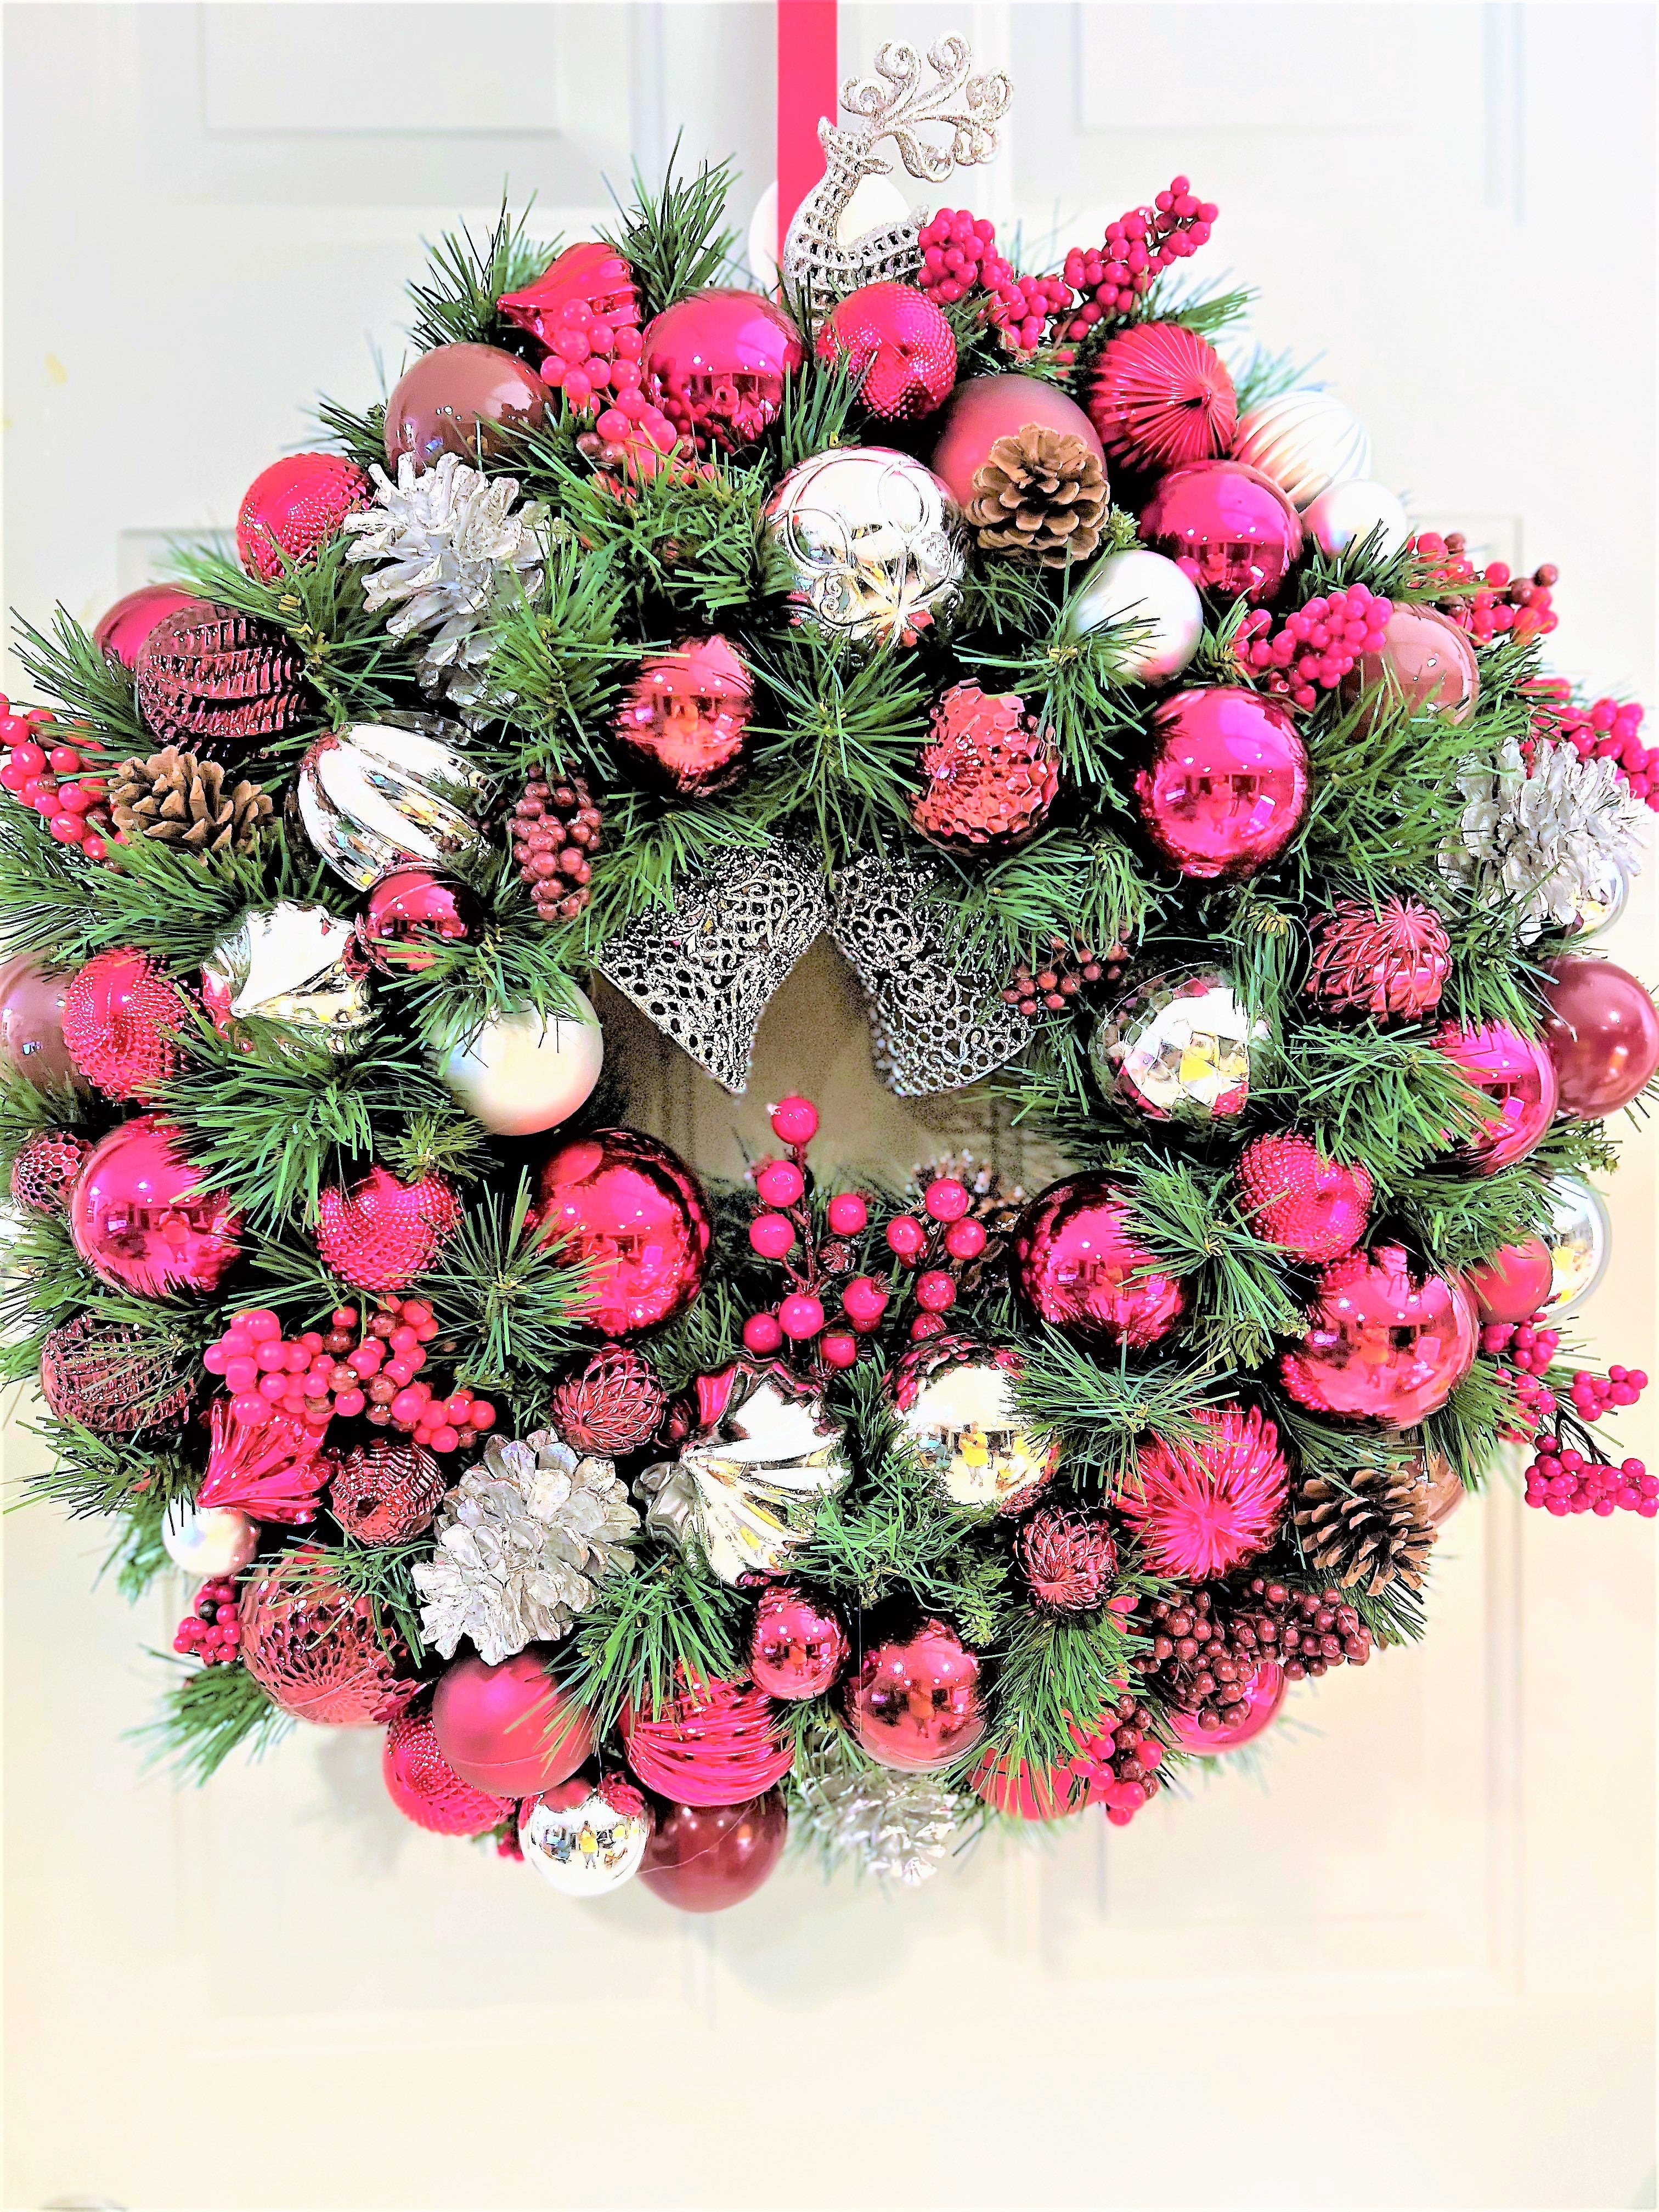 Traditional Holiday Wreath 25" Diameter X 8" depth